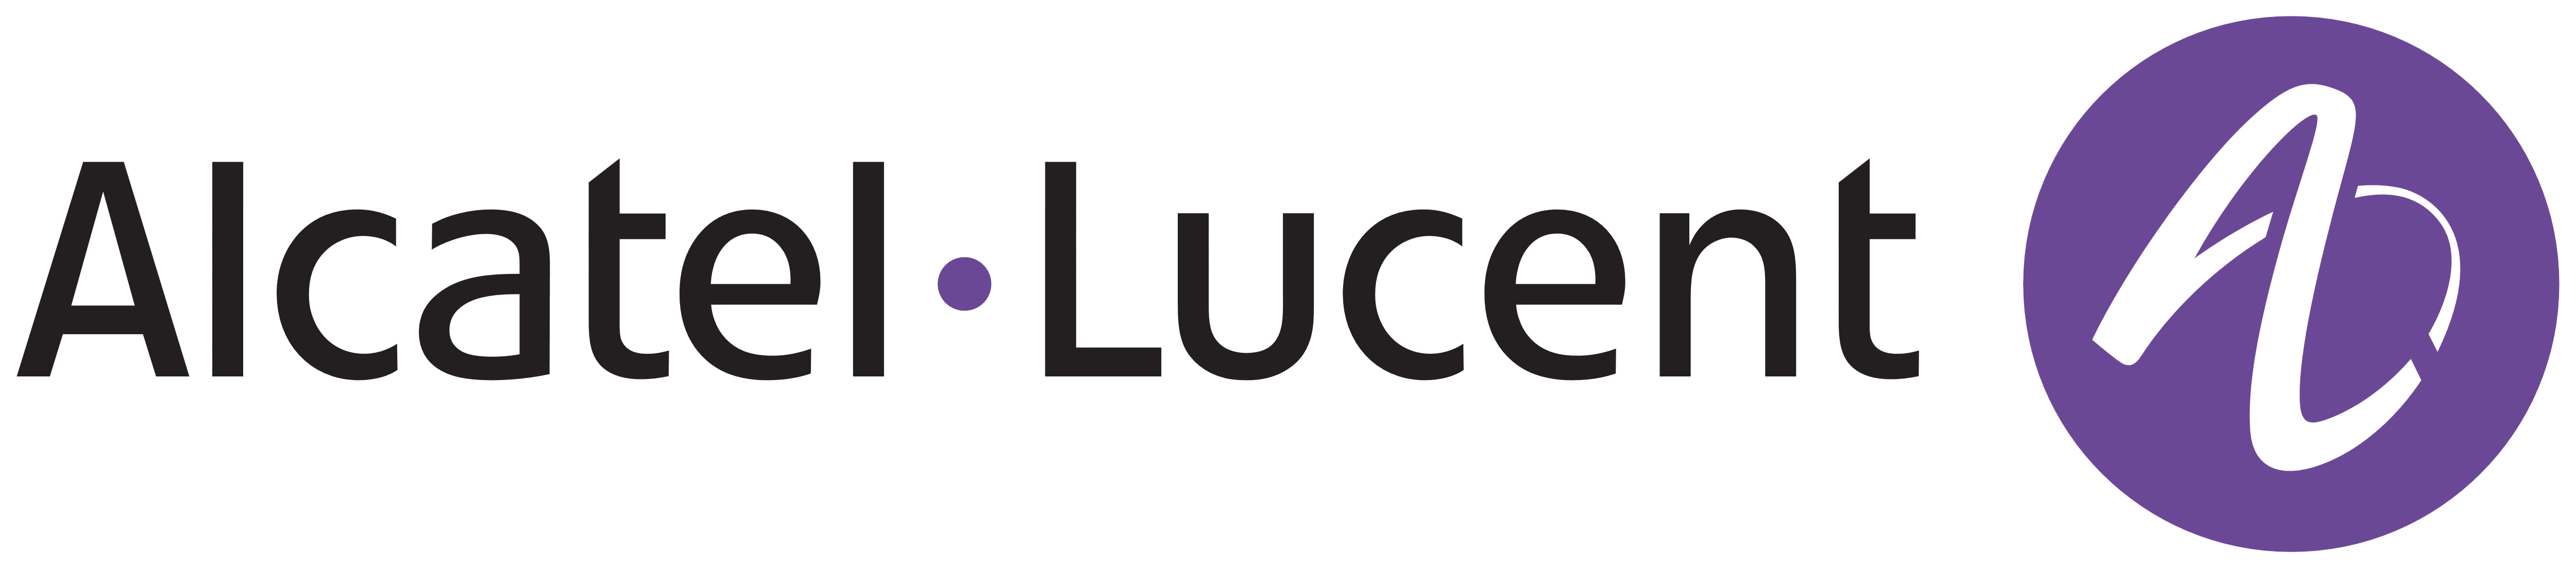 Lucent Logo - Alcatel-Lucent – Logos Download